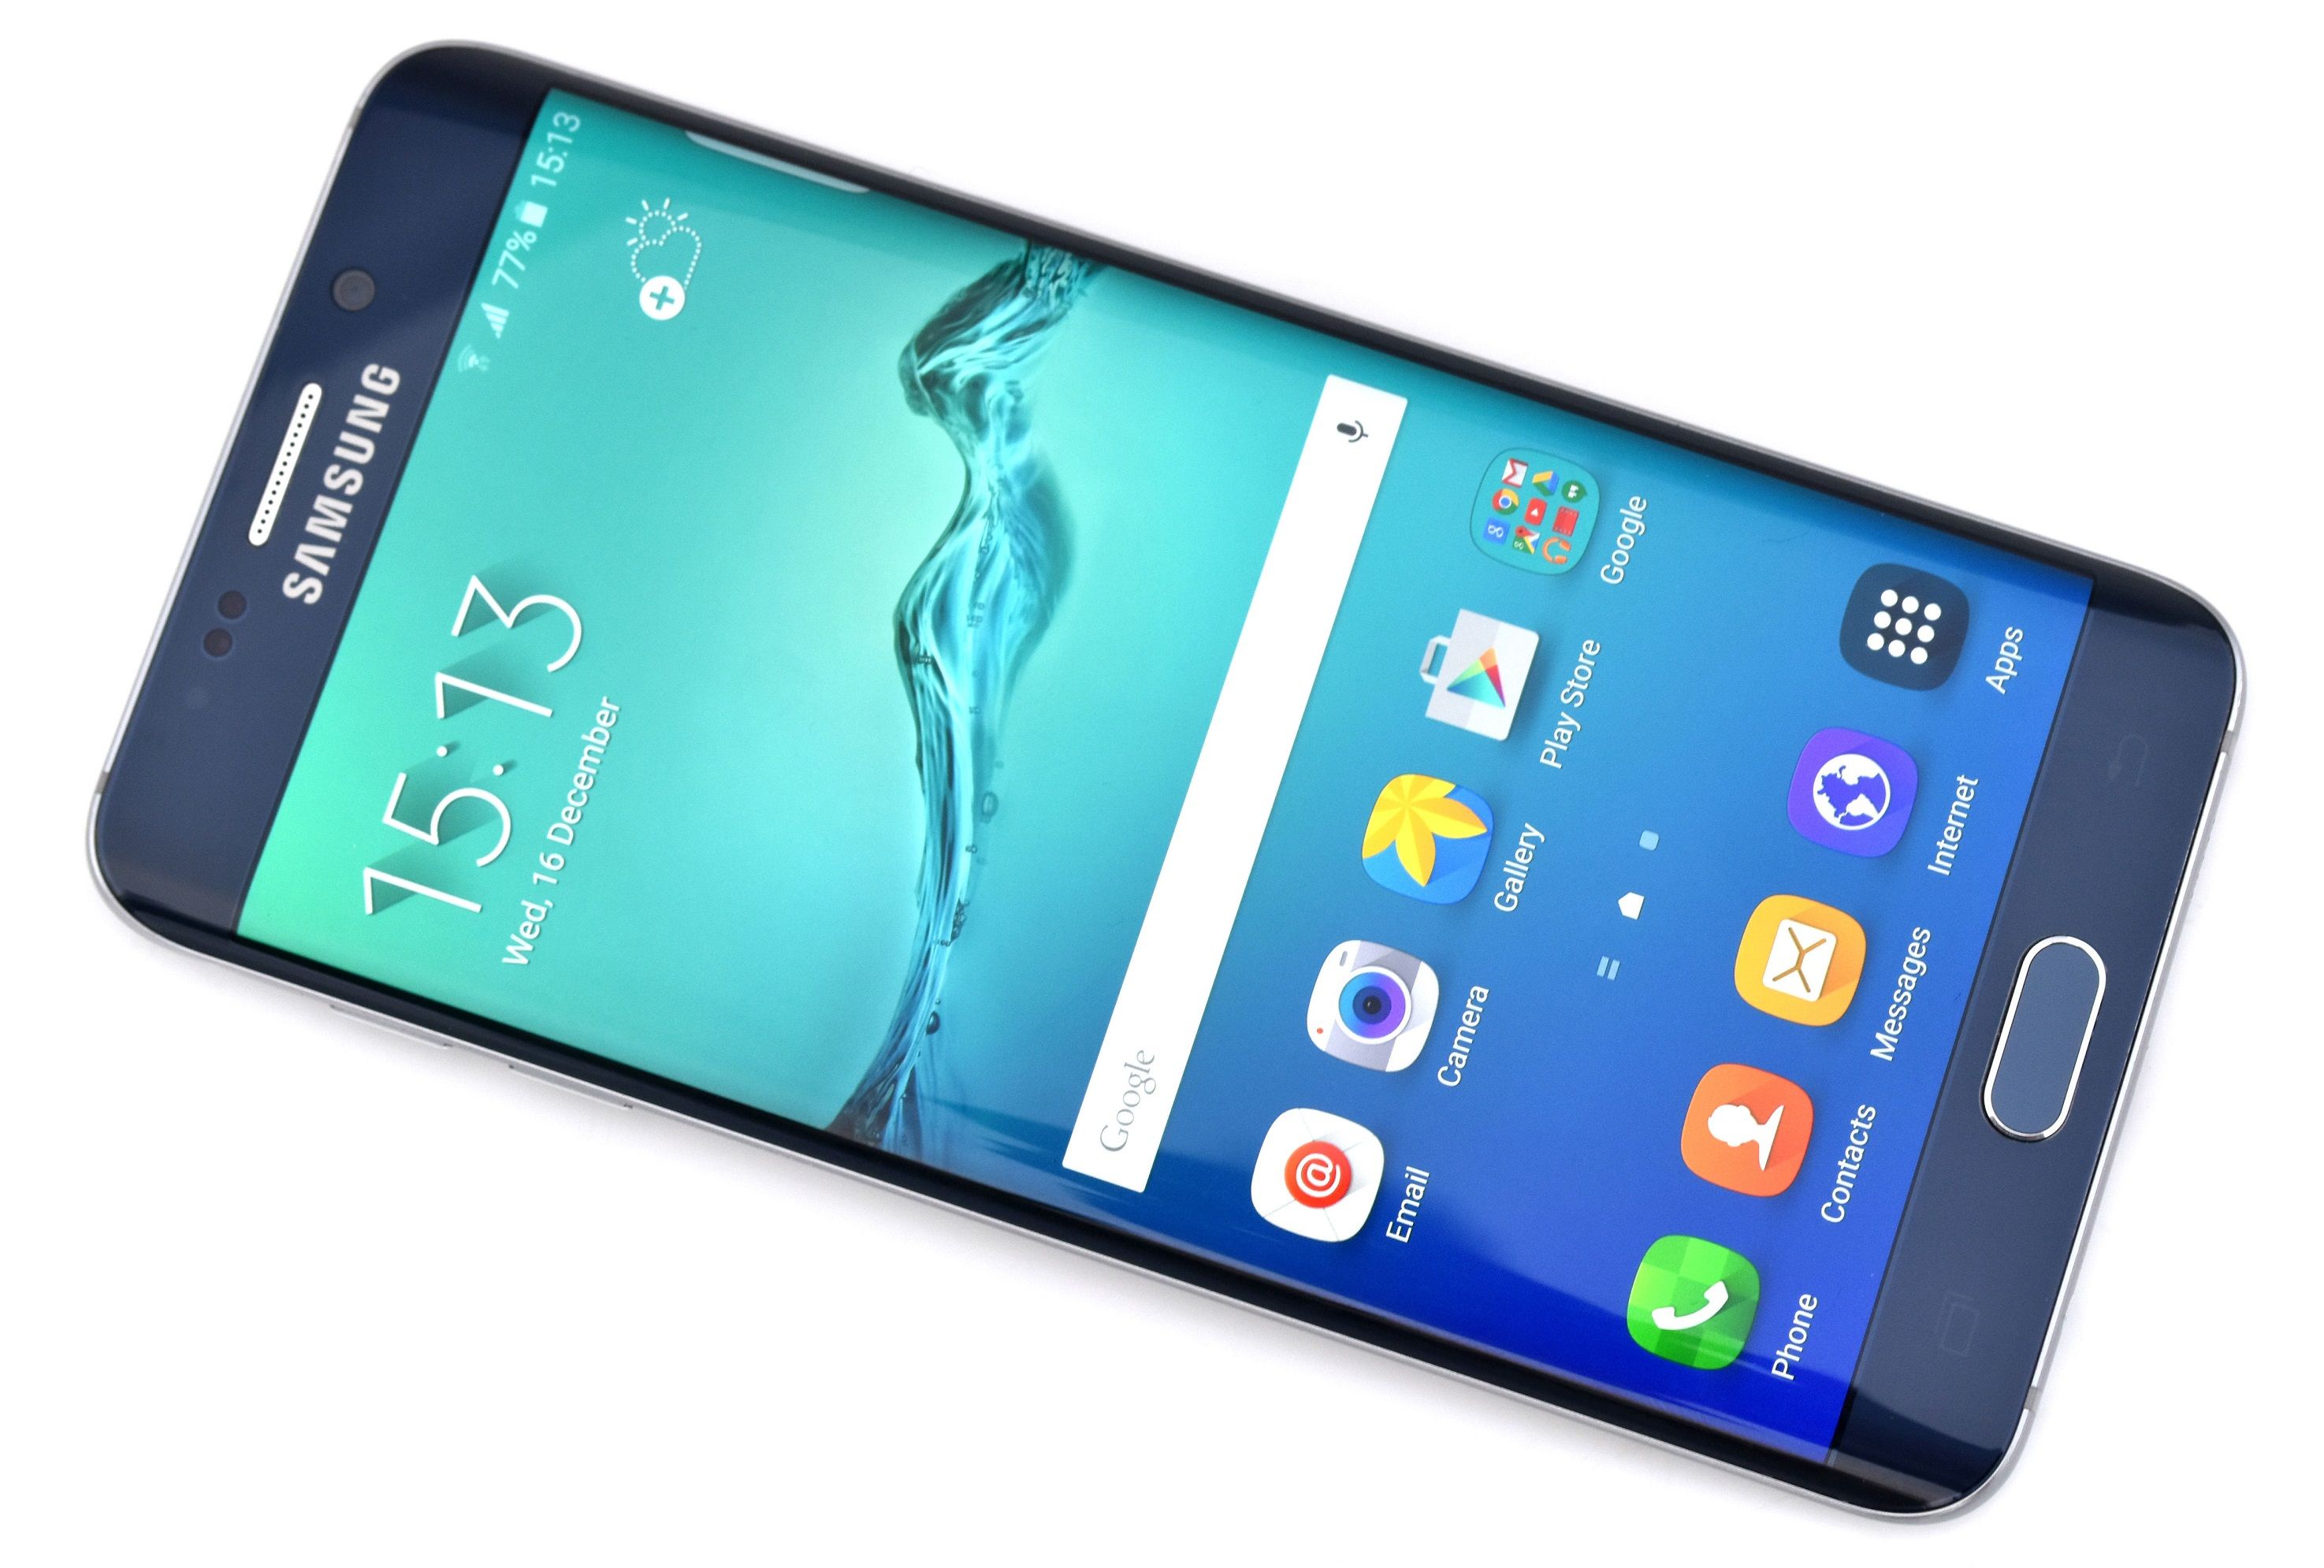 Highres Samsung Galaxy S6 Edge Plus Front3 Jpg 1450283761